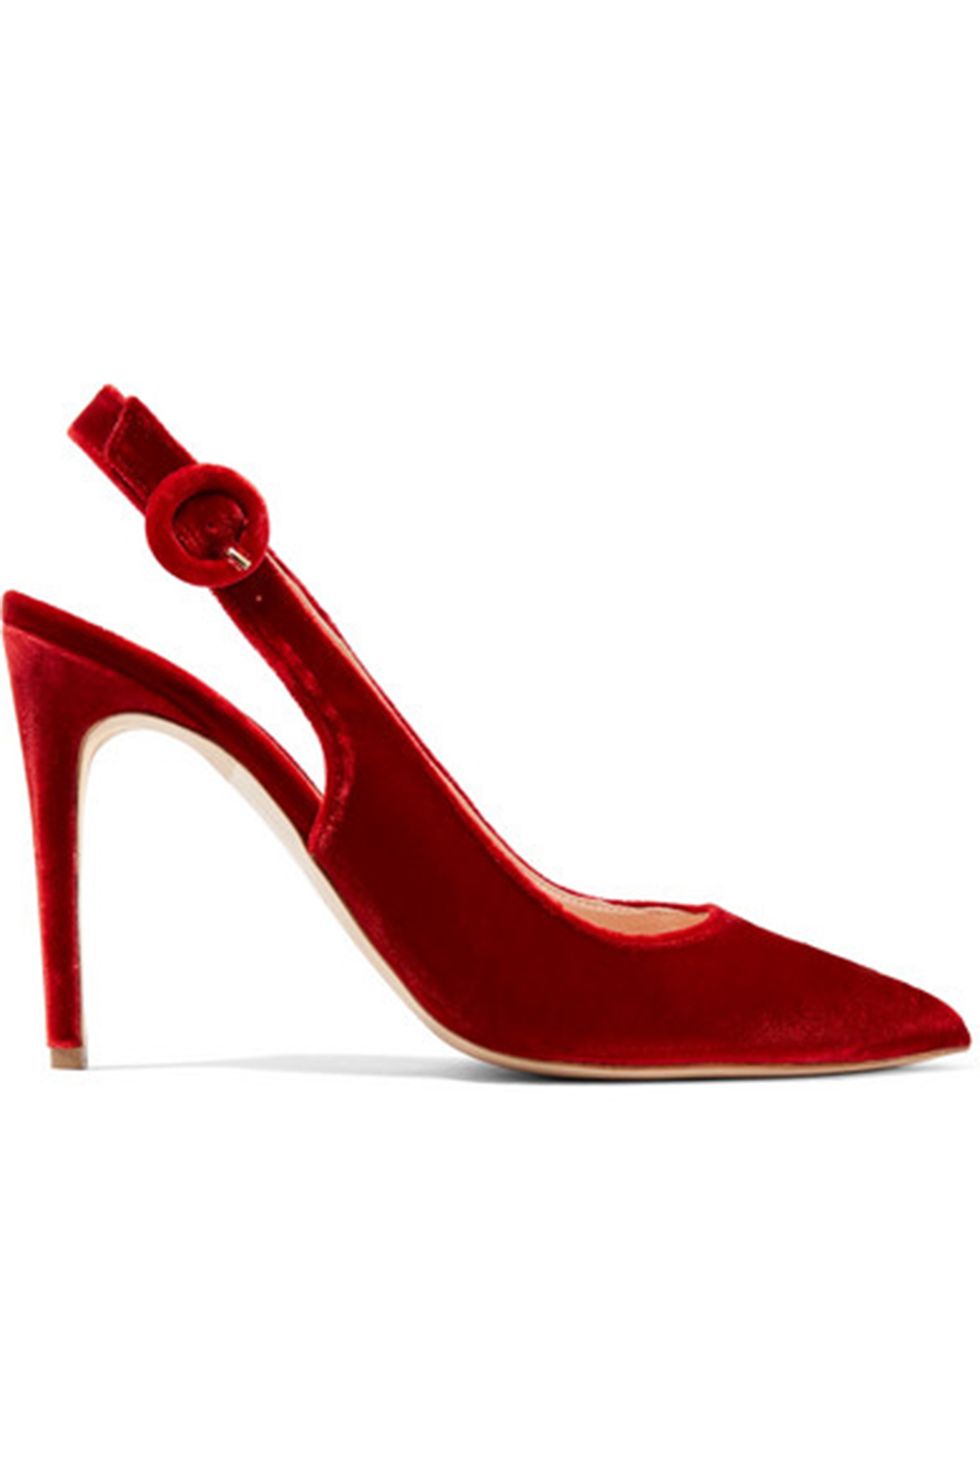 Footwear, High heels, Slingback, Red, Shoe, Court shoe, Basic pump, Leather, Carmine, Sandal, 